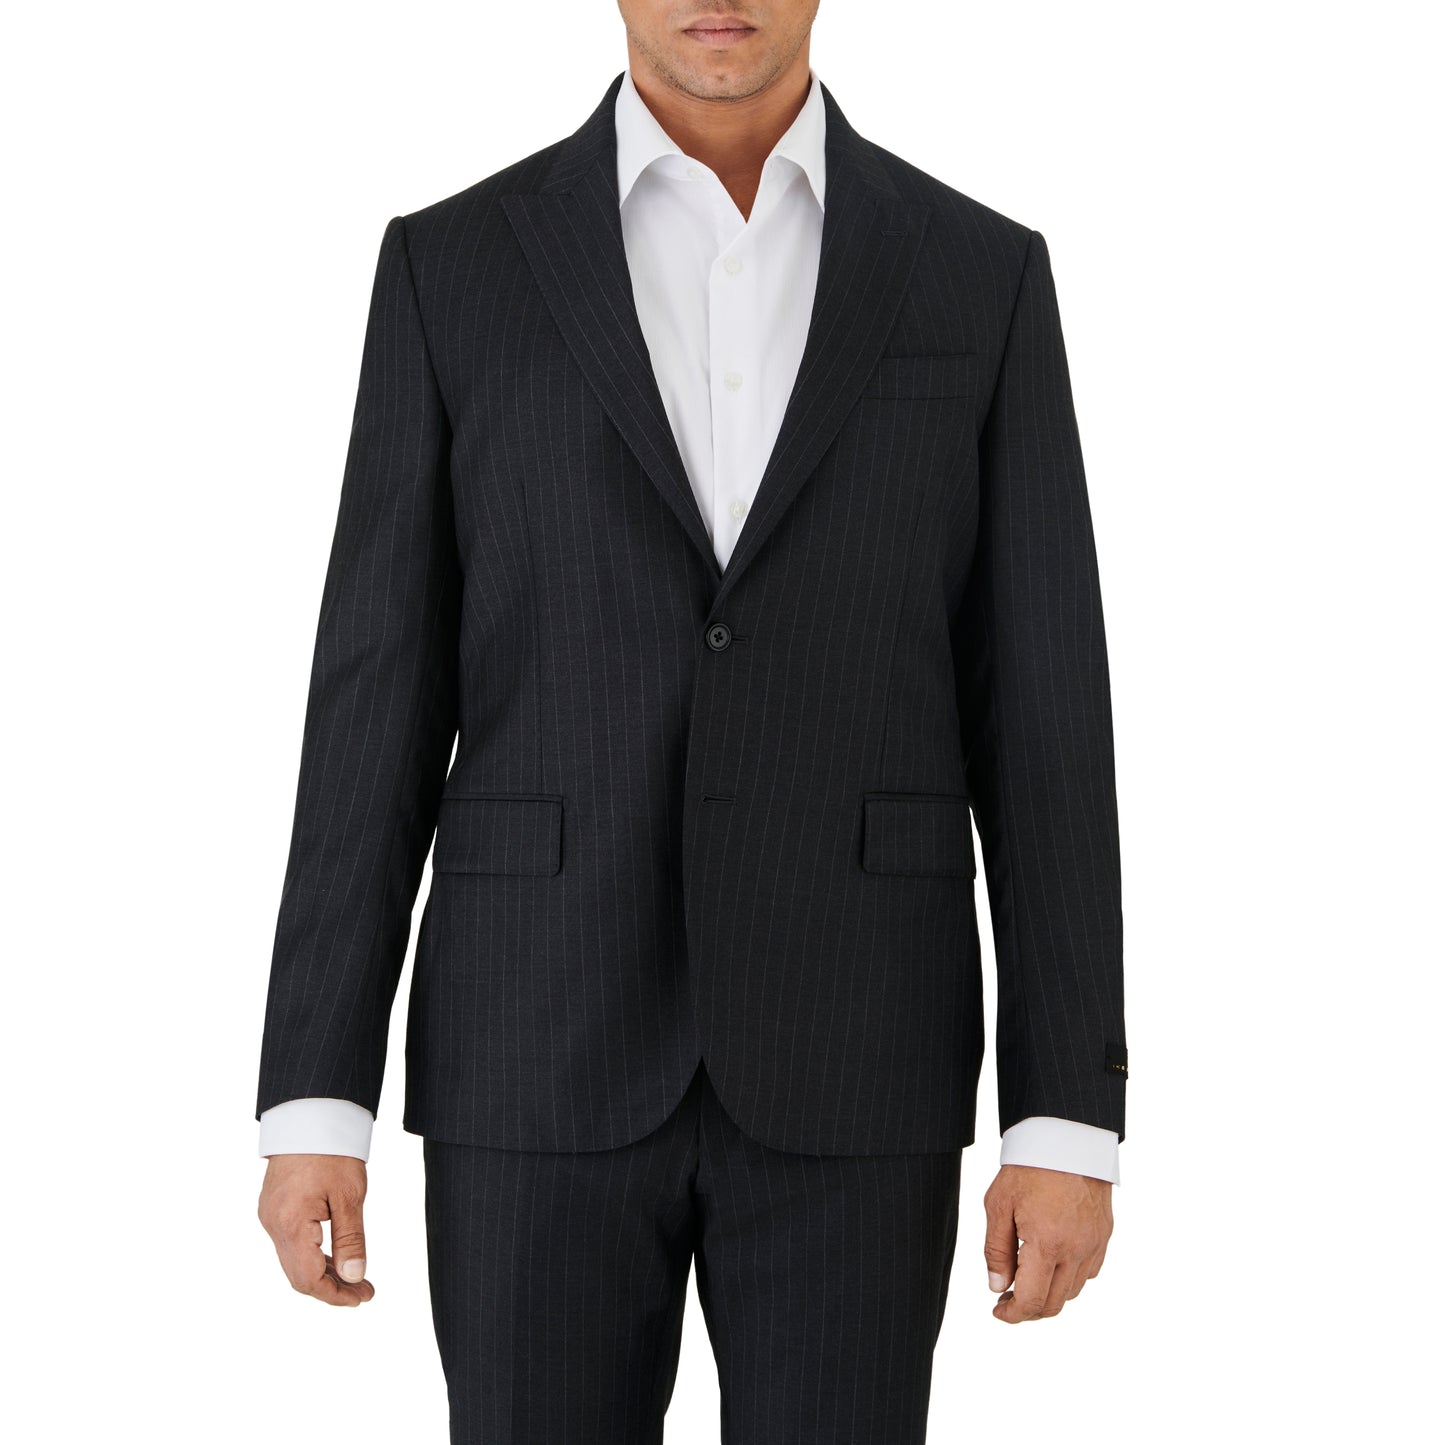 Deep Charcoal Pin Stripe Suit